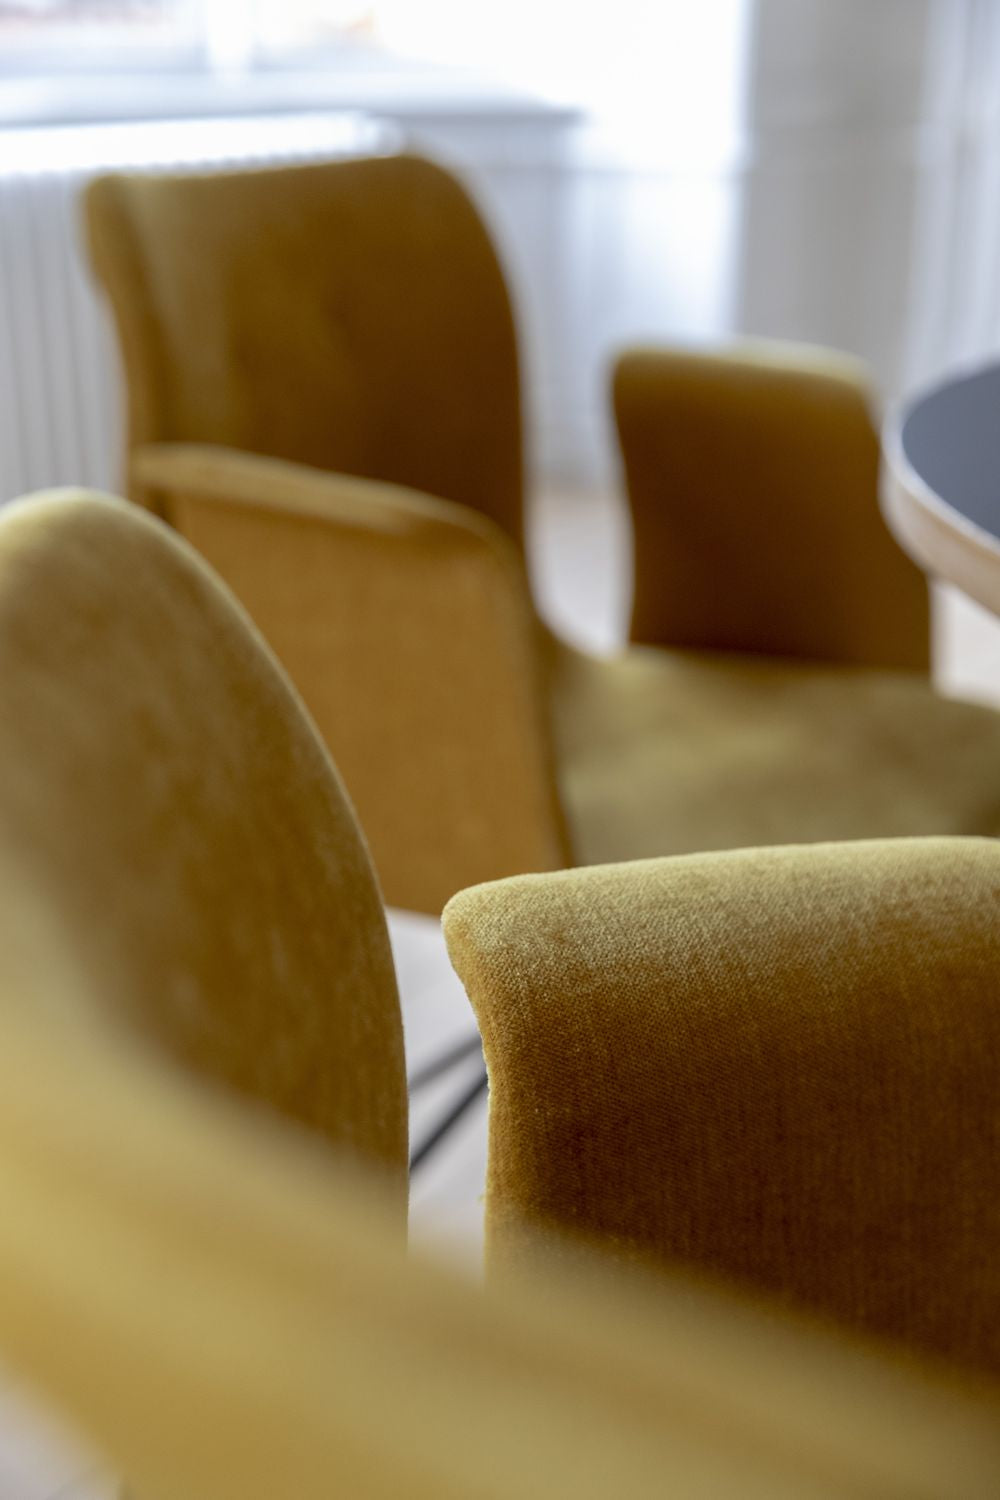 Bent Hansen Primum Chair With Armrests Black Firm Frame, Tartufo Davos Leather